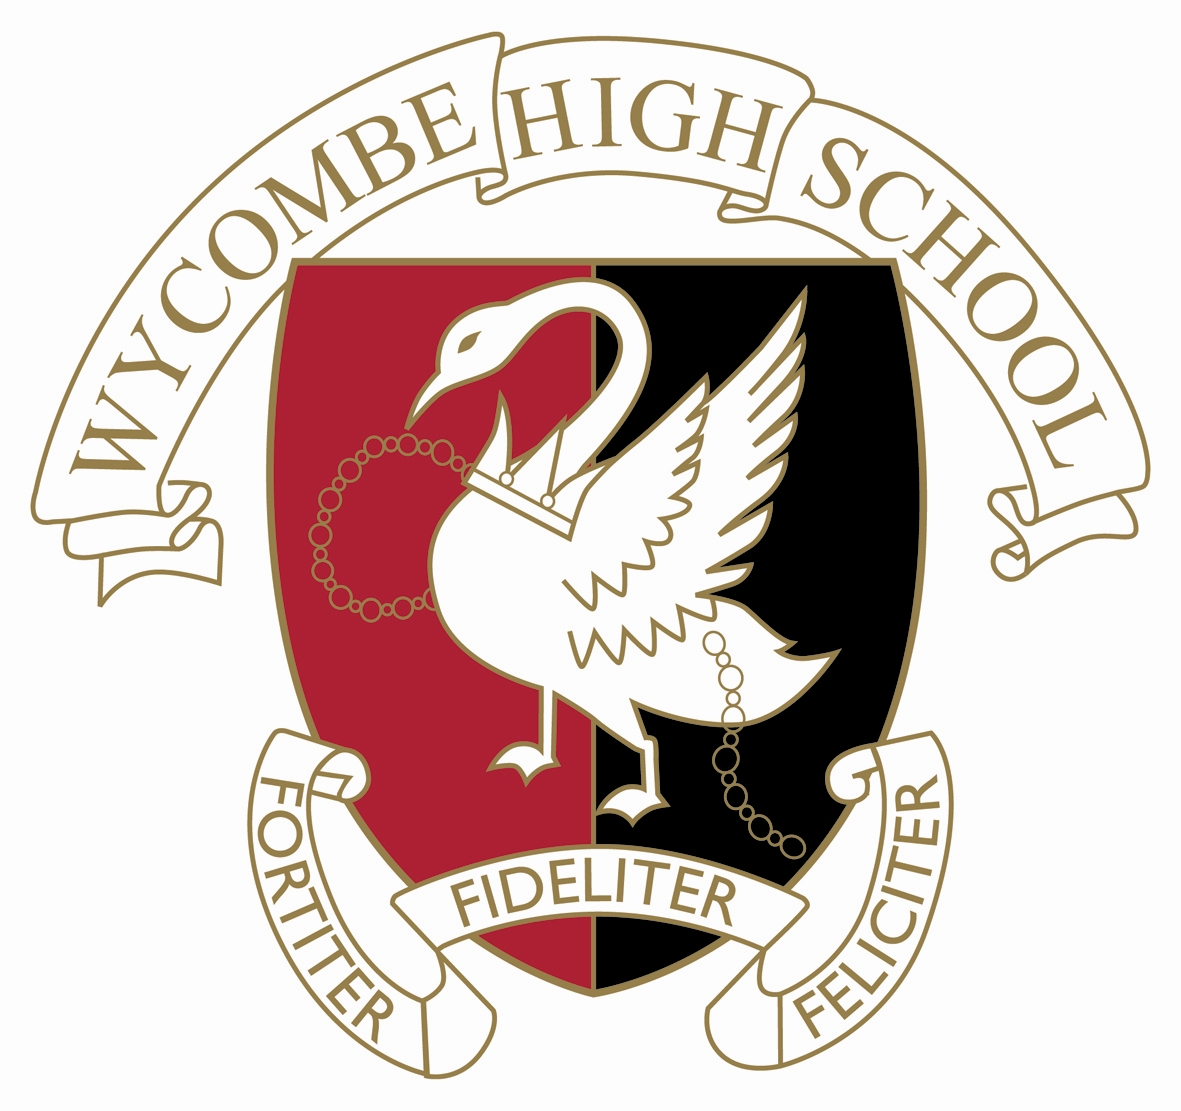 Wycombe High School